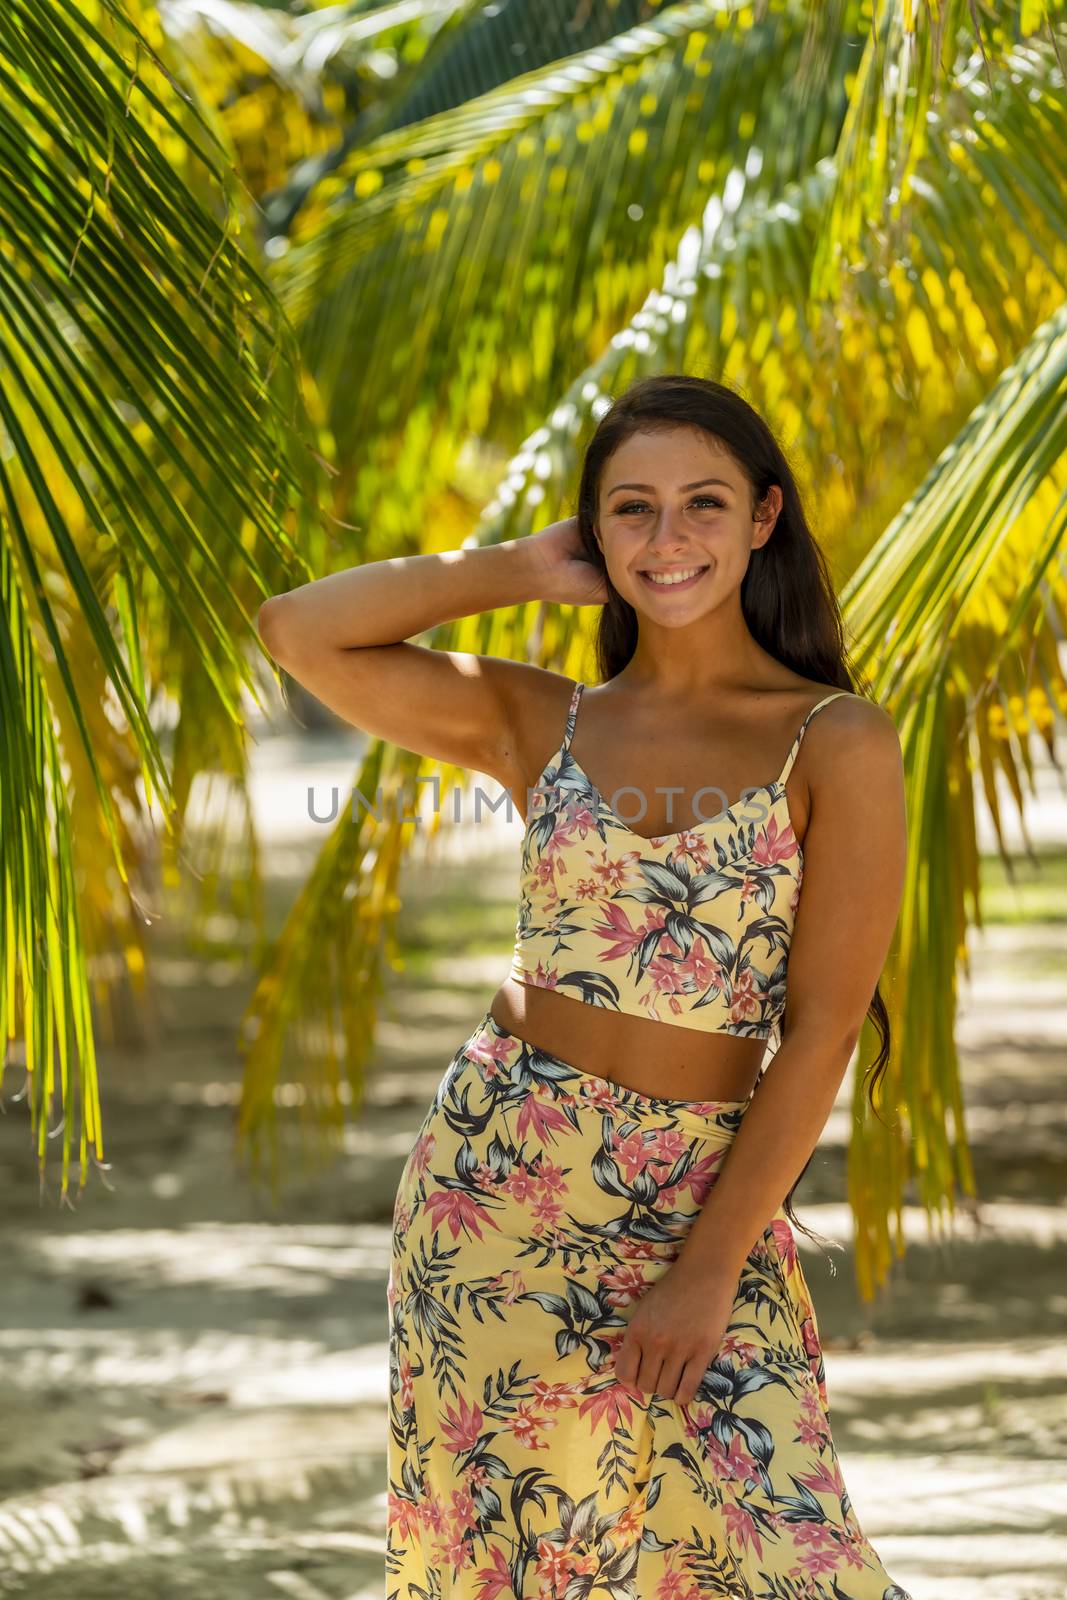 A beautiful brunette model enjoys the soft light under a palm tree in the Yucatán Peninsula near Merida, Mexico